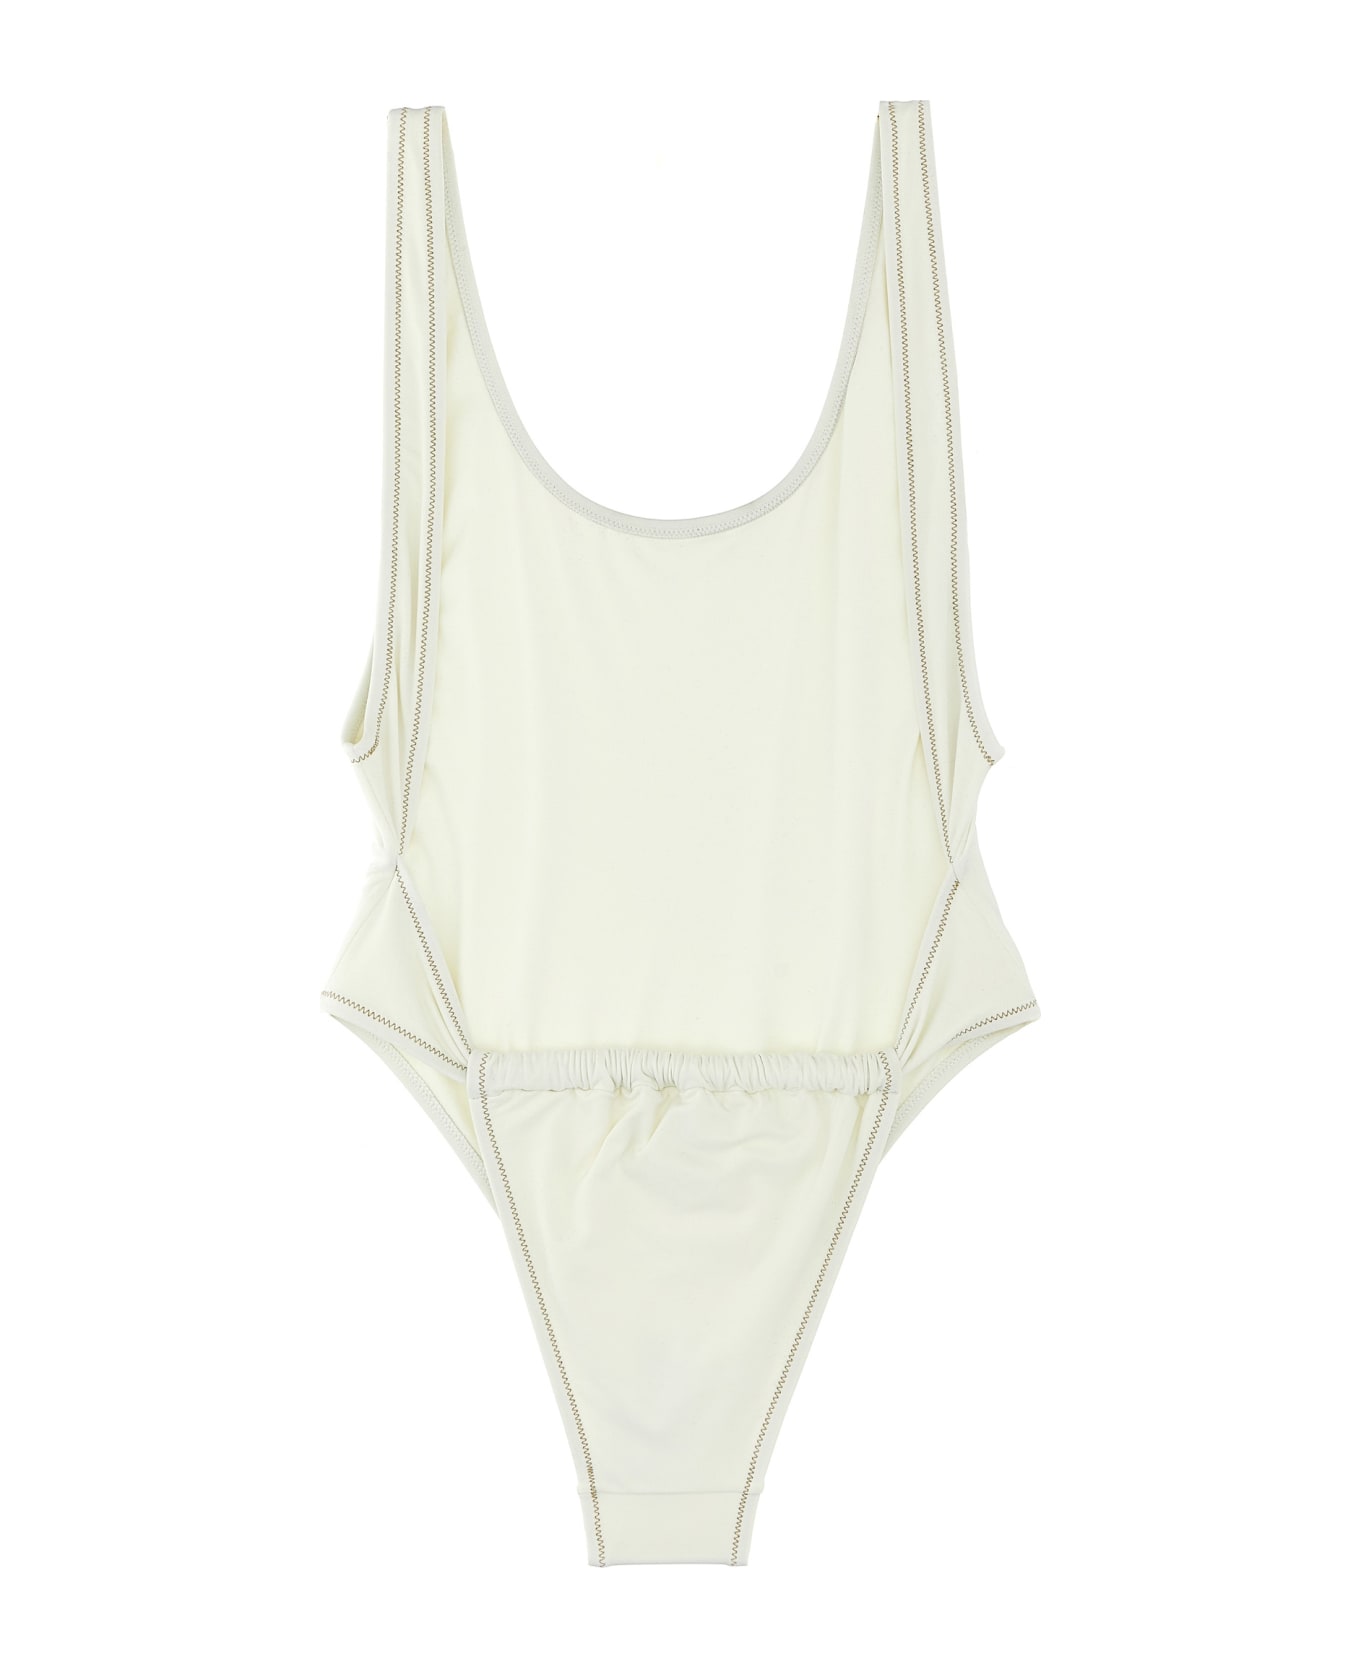 Reina Olga 'pamela' One-piece Swimsuit - White 水着